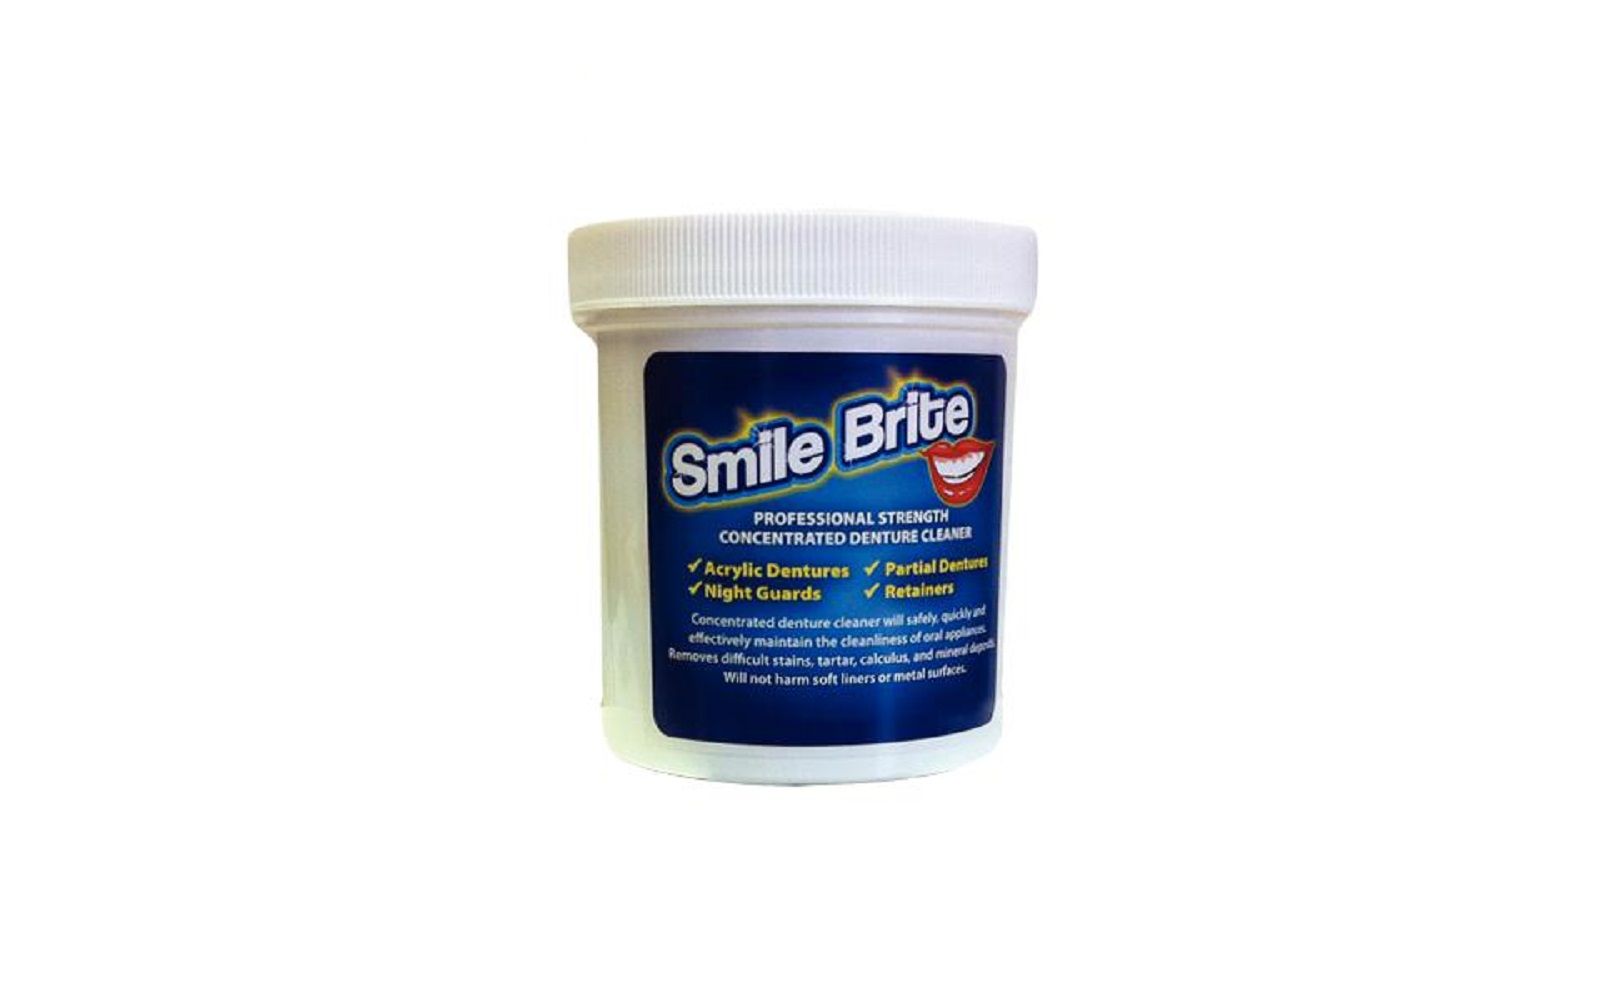 Smile brite denture cleaner, 1 lb jar